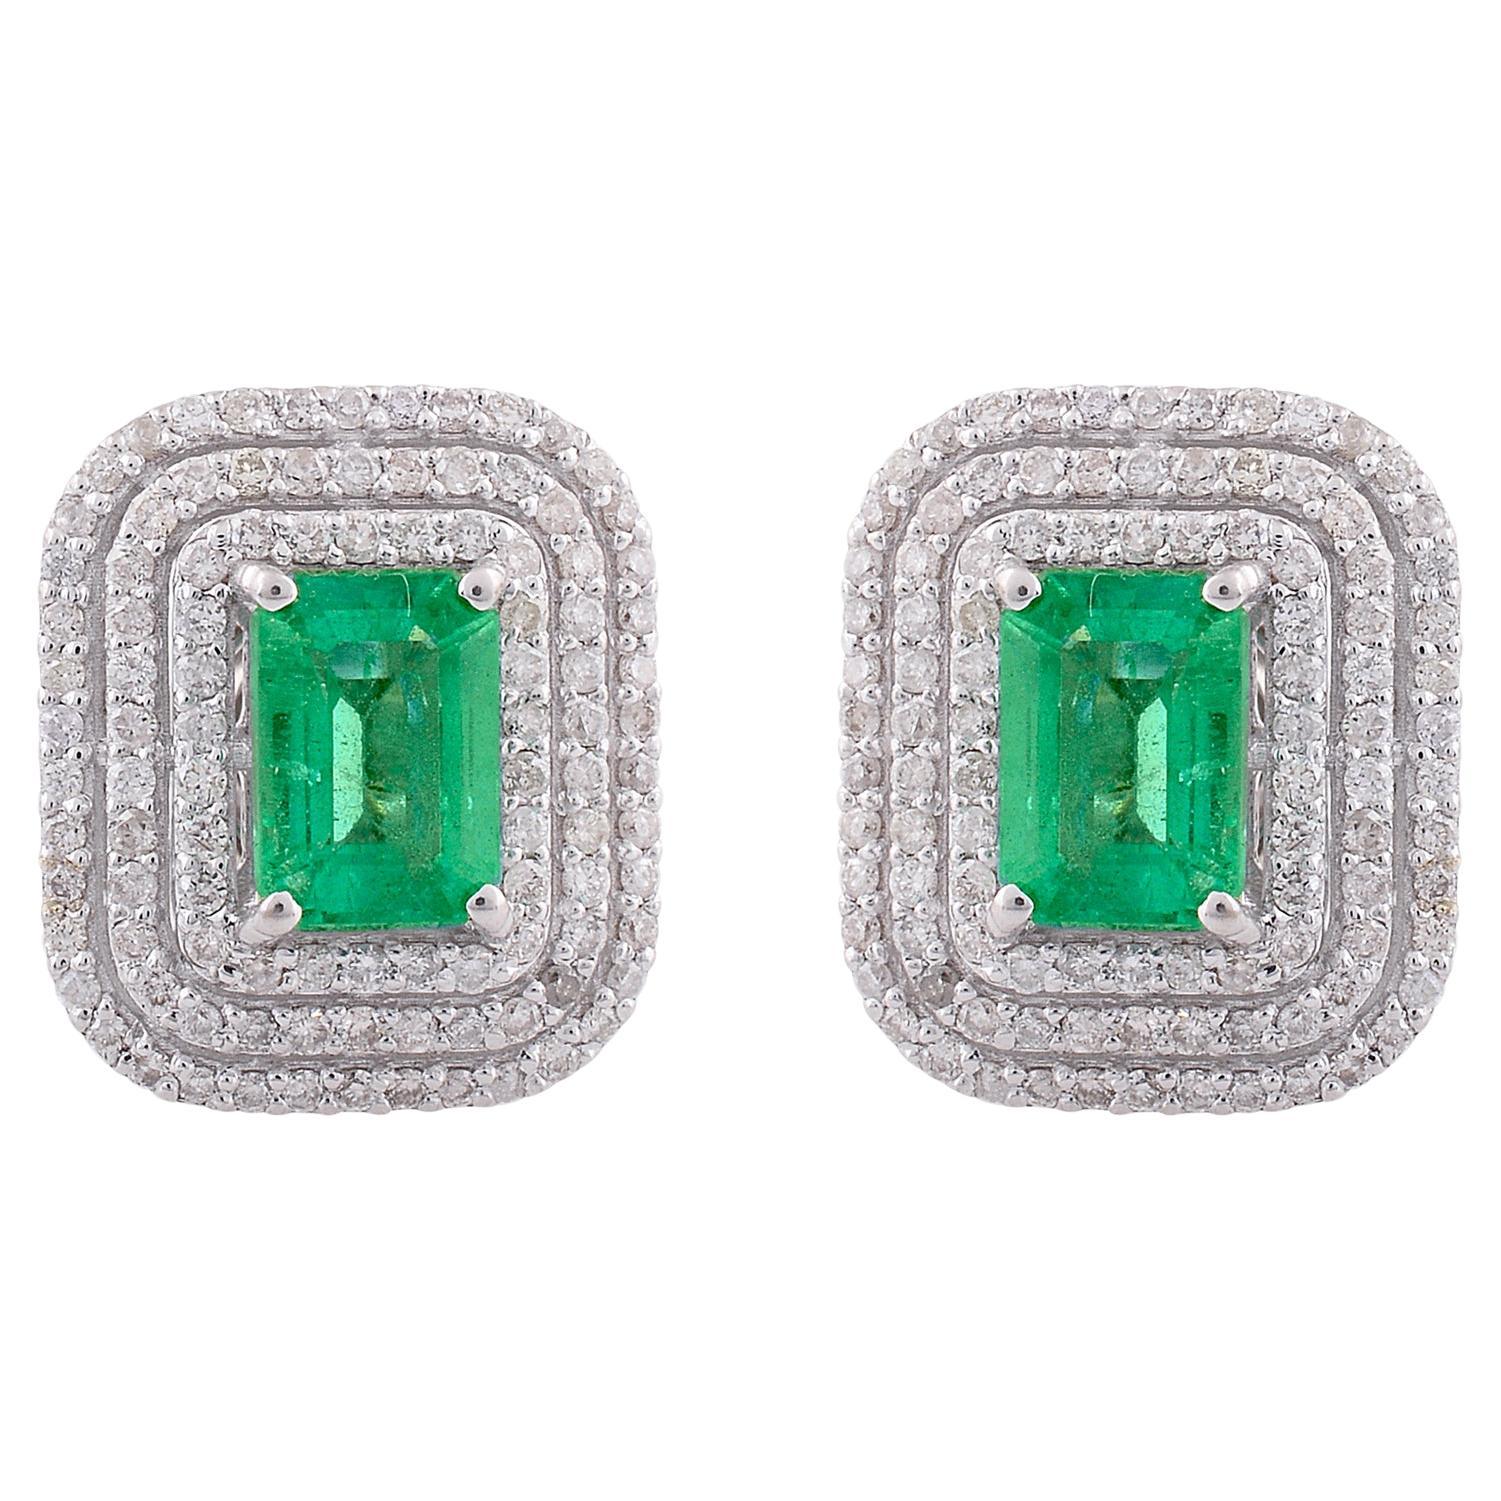 Zambian Emerald Gemstone Stud Earrings Diamond Pave Solid 14k White Gold Jewelry For Sale